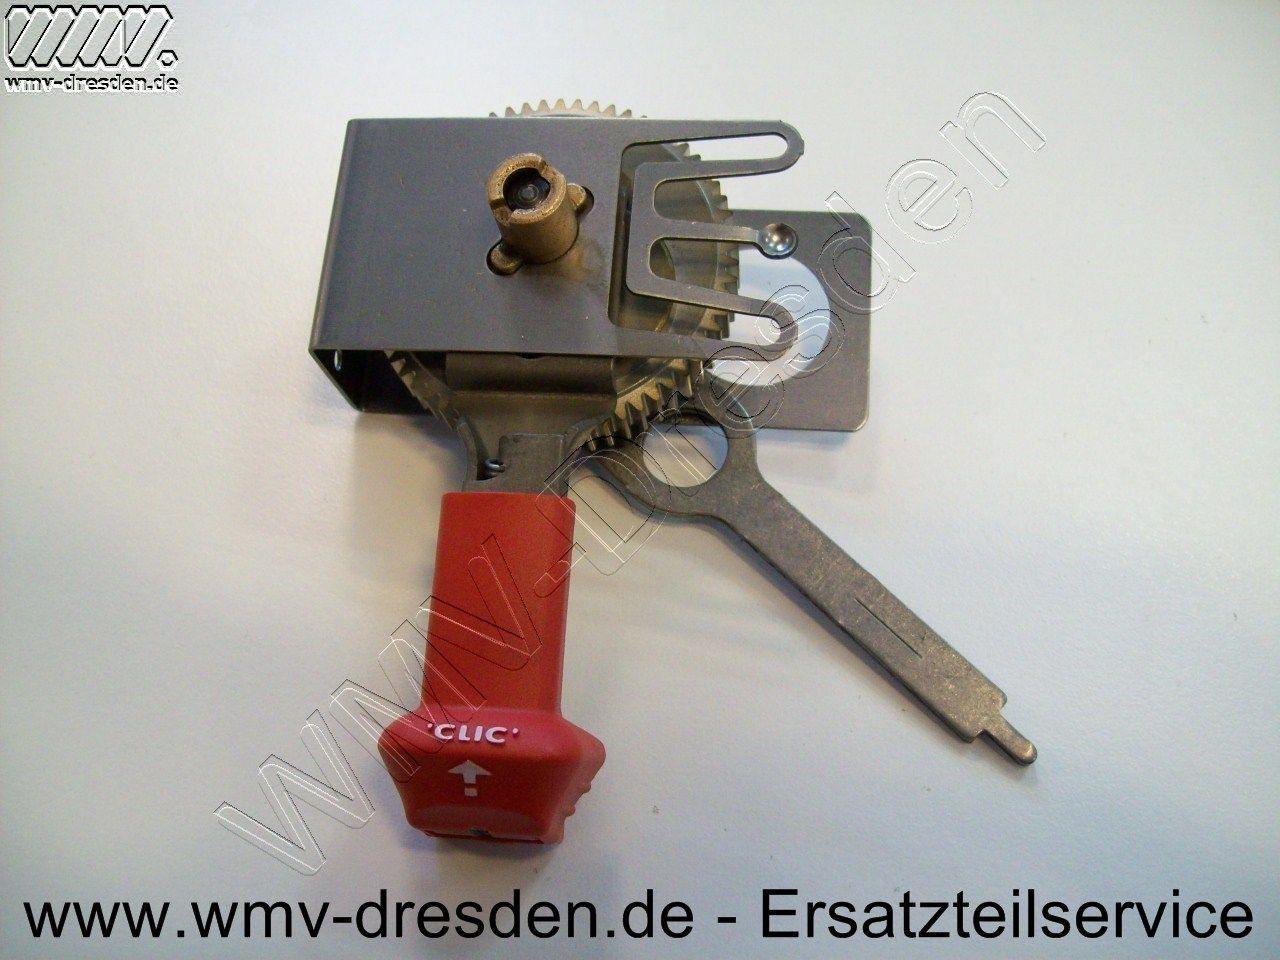 Artikel 2610391456-B17 Hersteller: Bosch-Skil-Dremel 